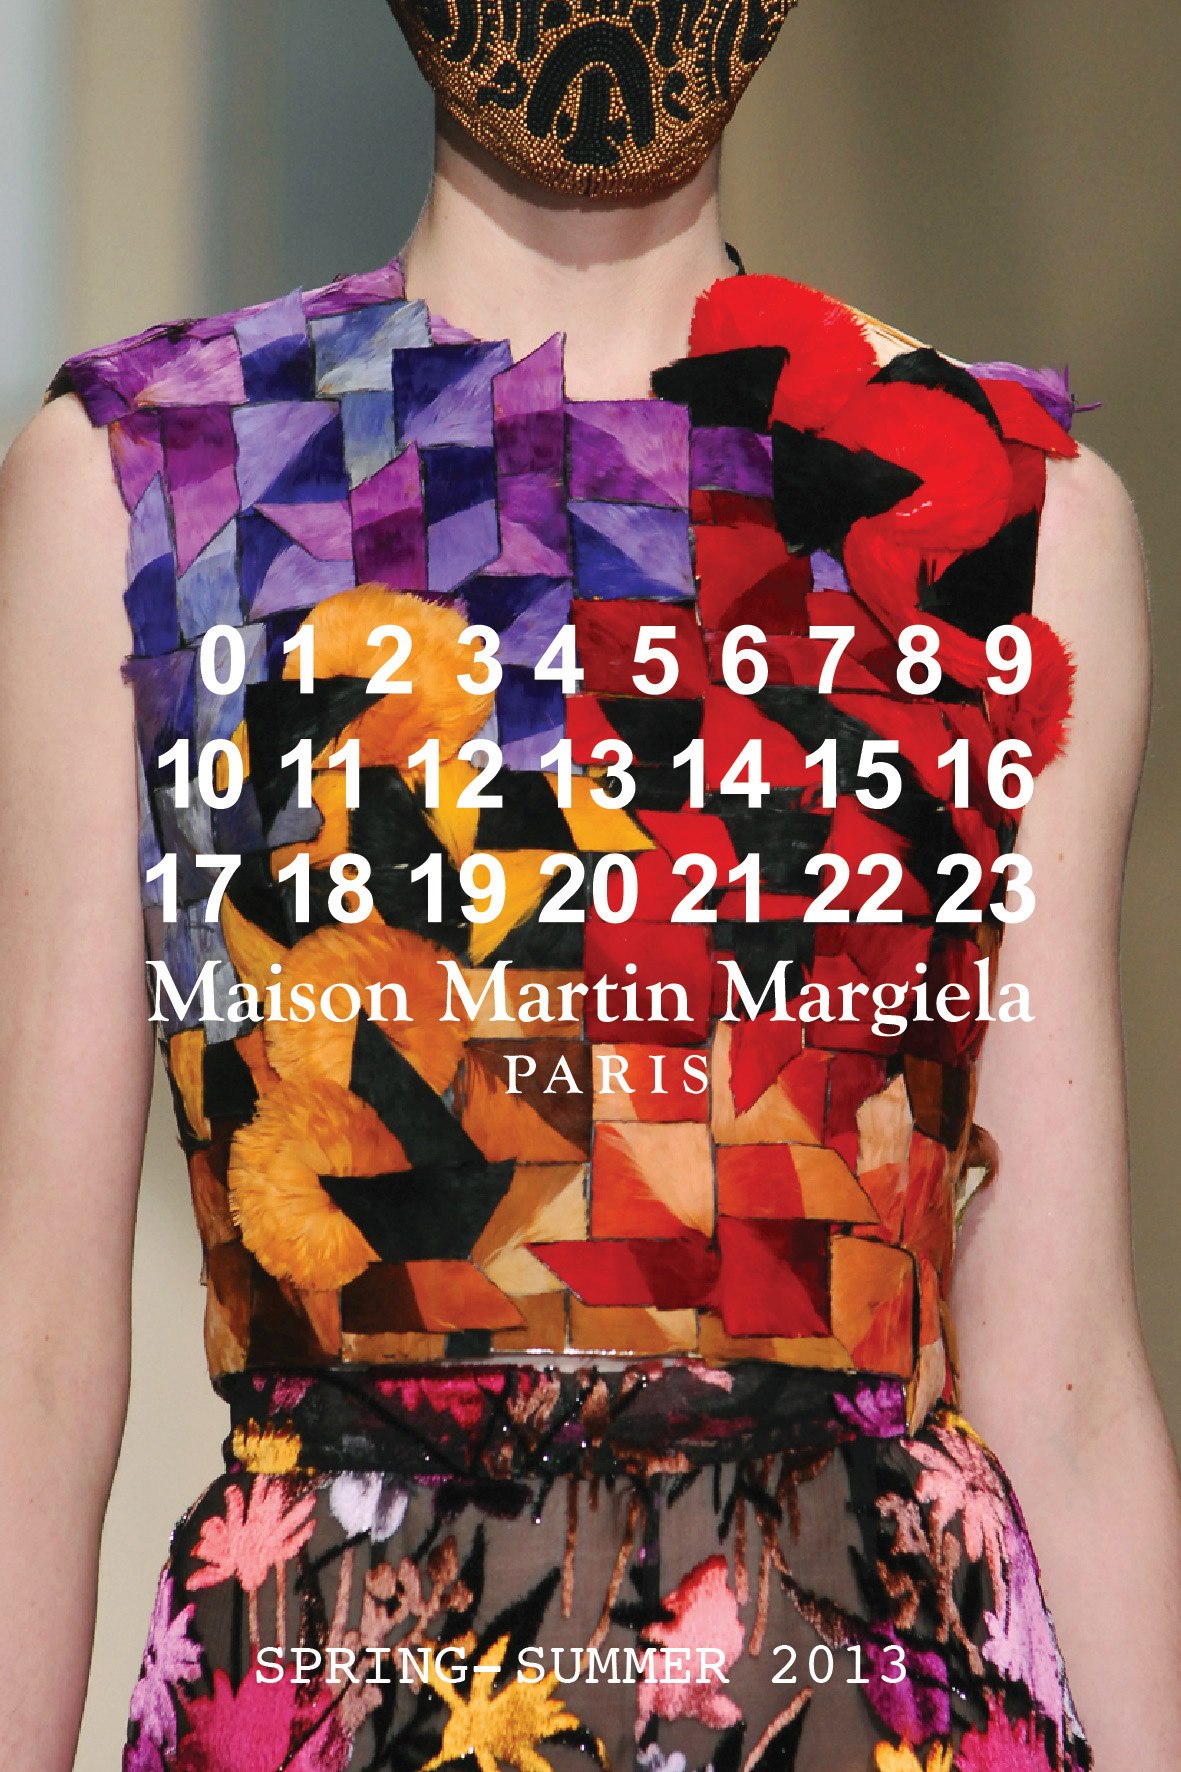 Maison Martin Margiela Artisanal Haute Couture Spring Summer 2013